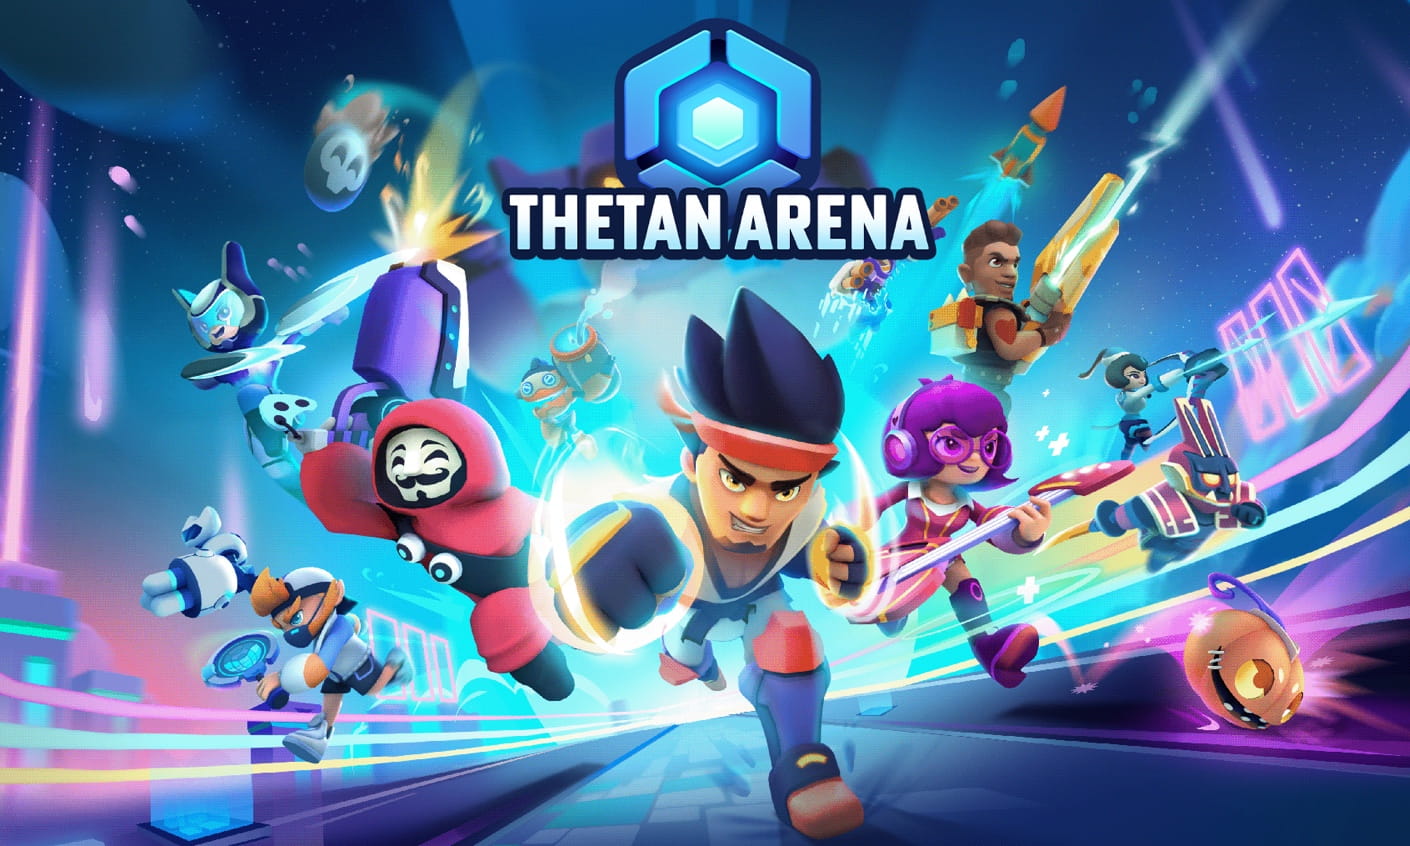 Play to earn - Thetan Arena